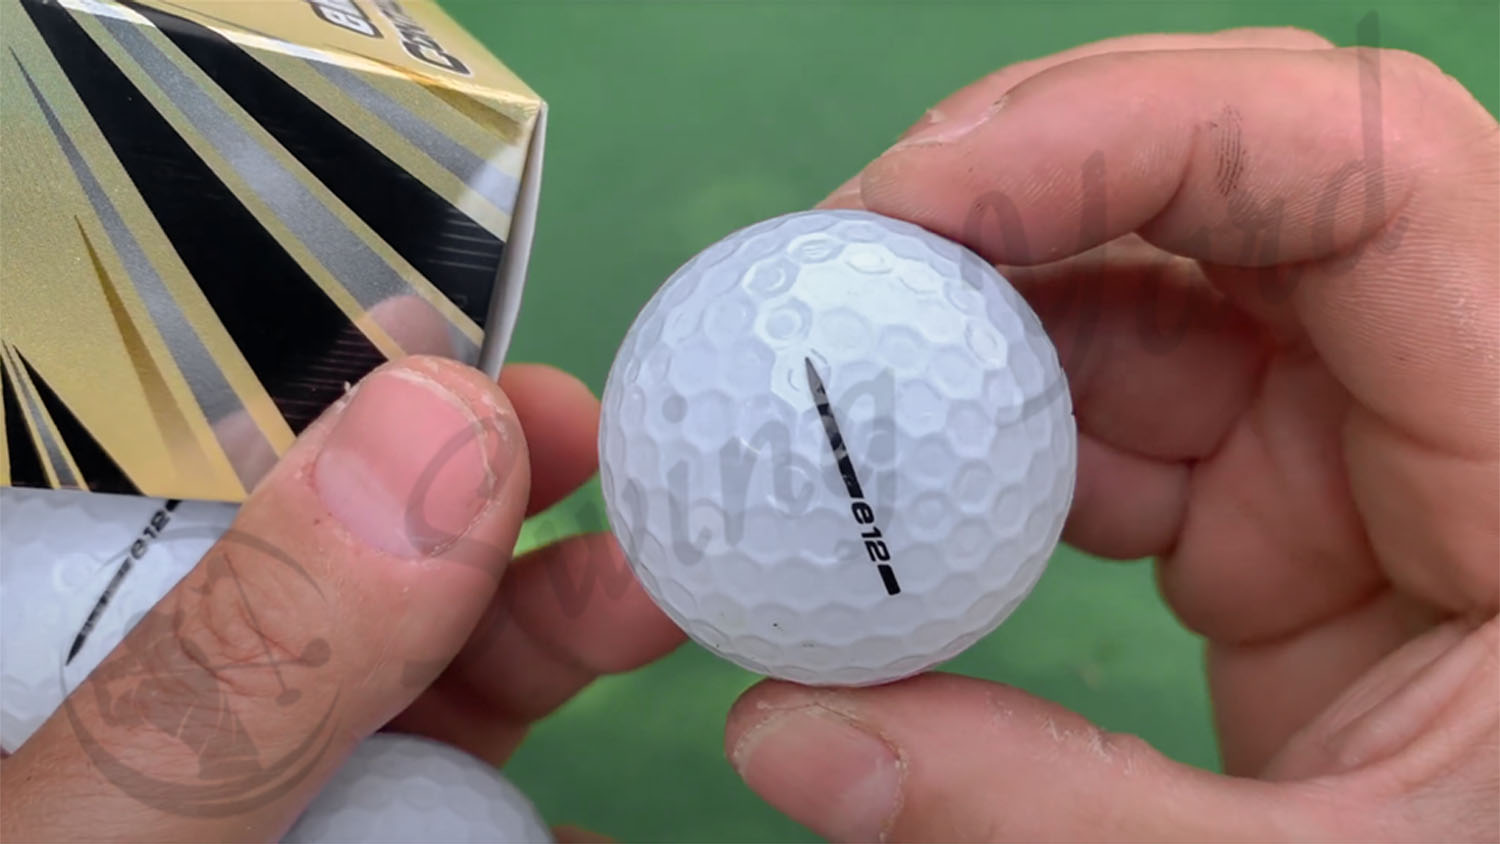 A Bridgestone e12 ball for testing at the golf course